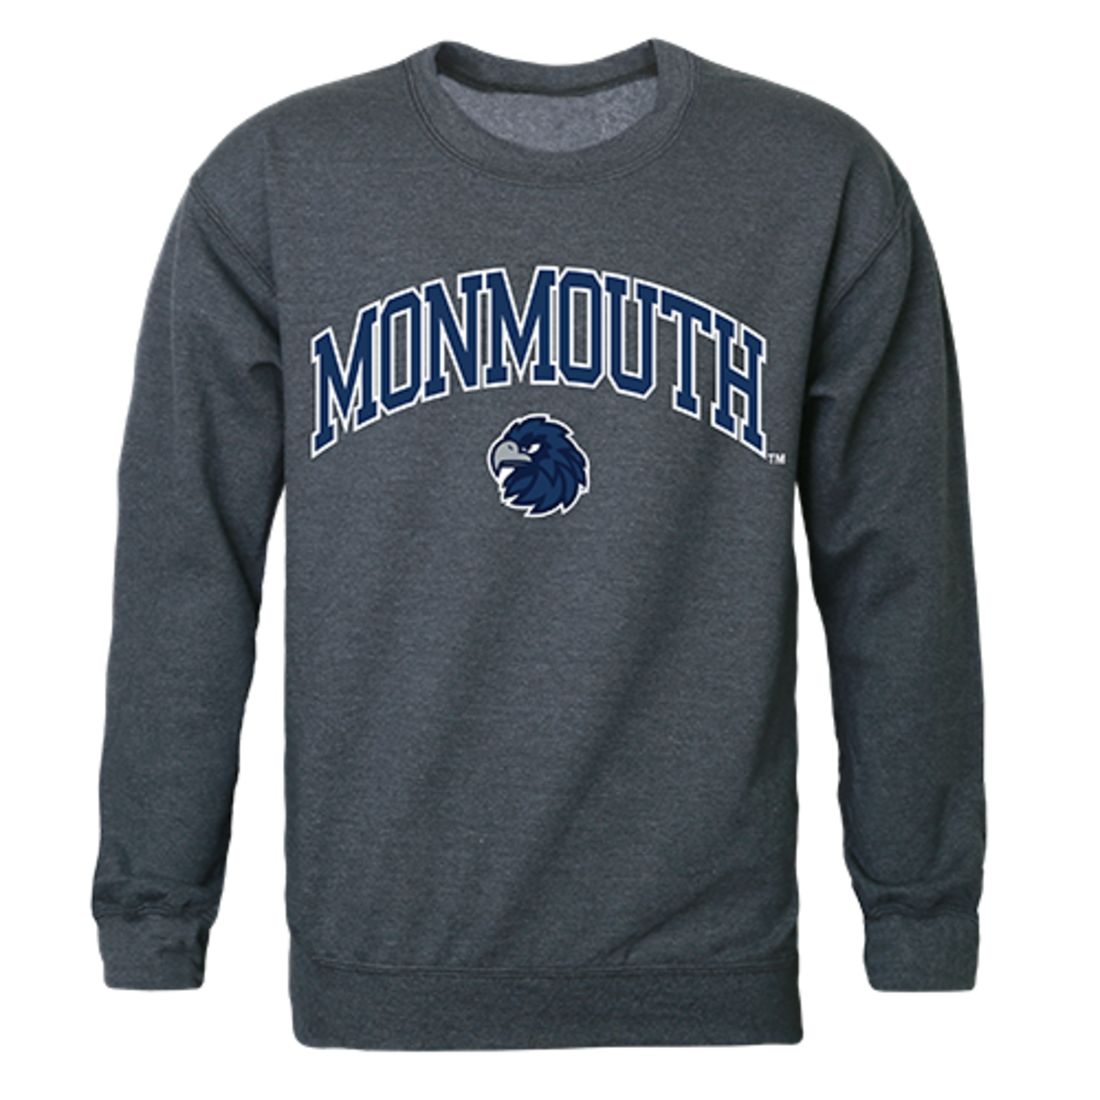 Monmouth University Campus Crewneck Pullover Sweatshirt Sweater Heather Charcoal-Campus-Wardrobe